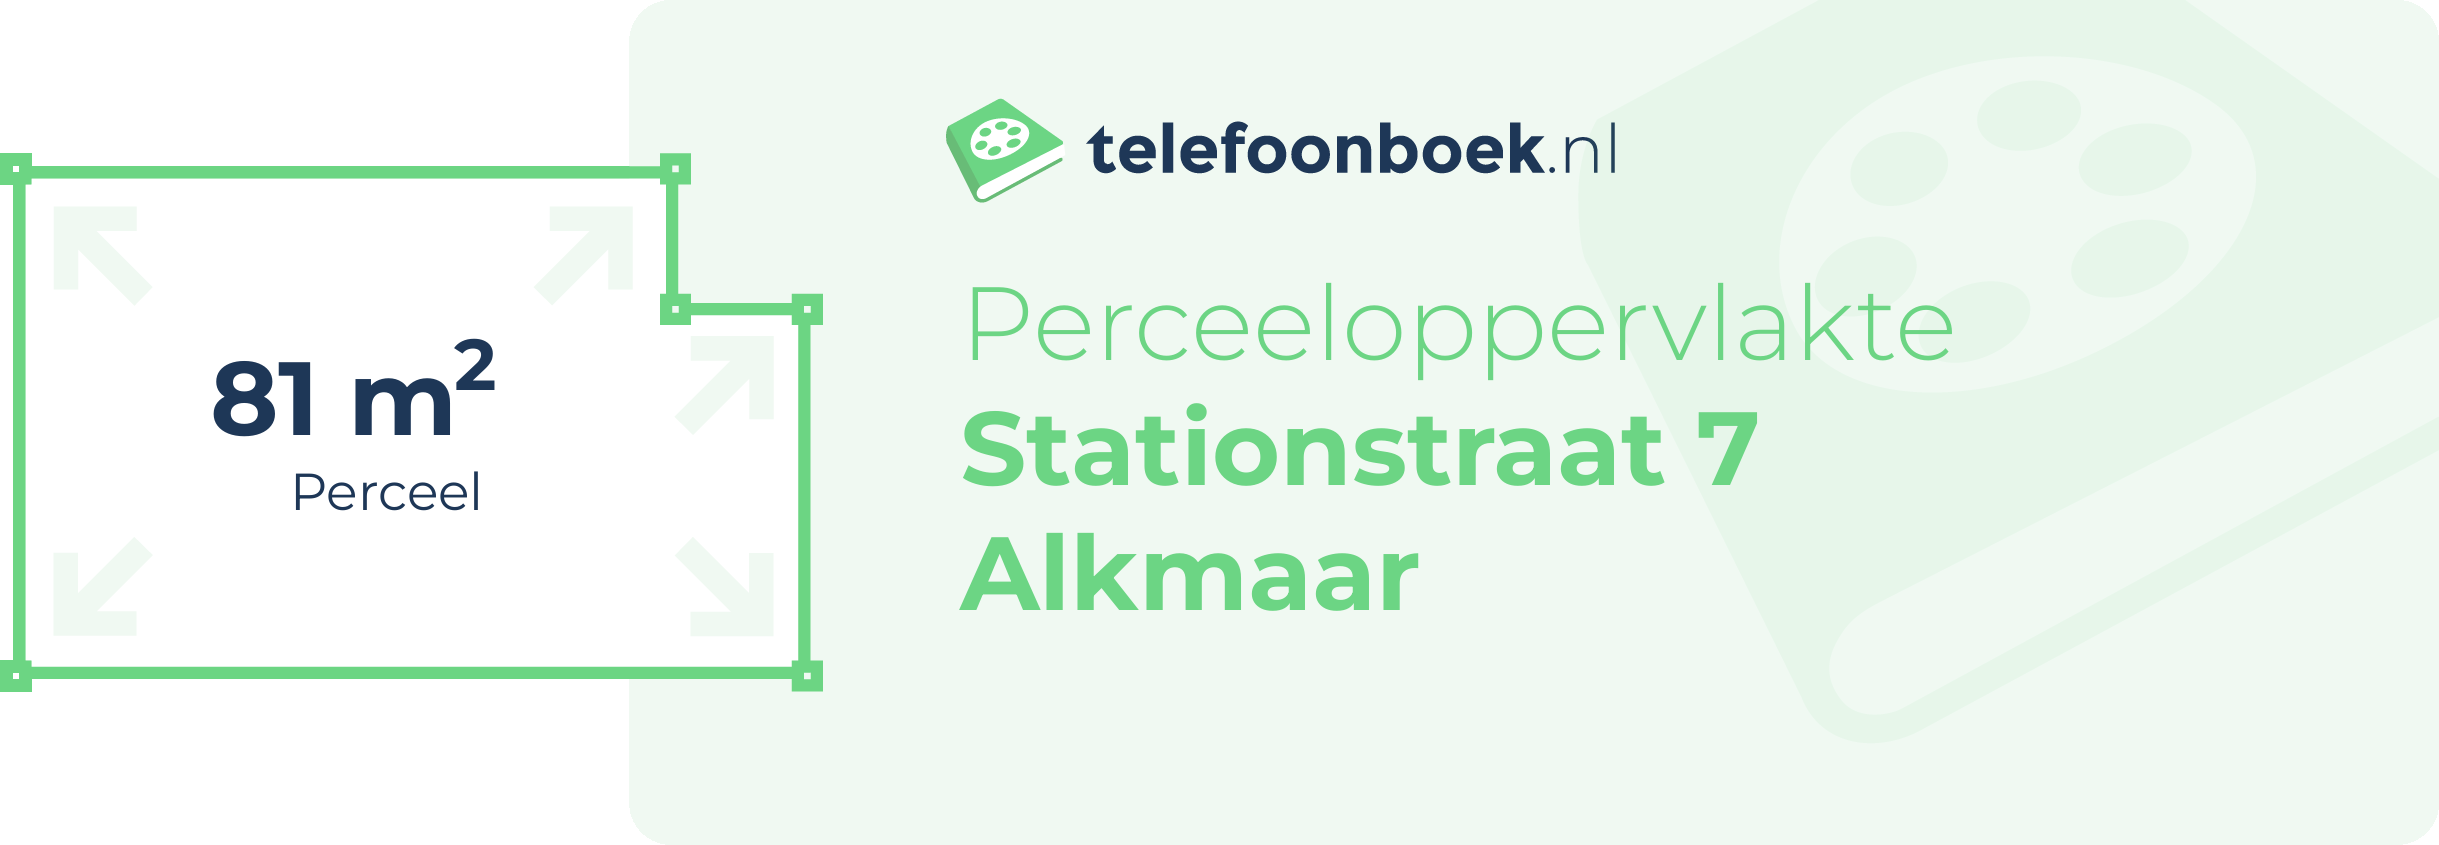 Perceeloppervlakte Stationstraat 7 Alkmaar